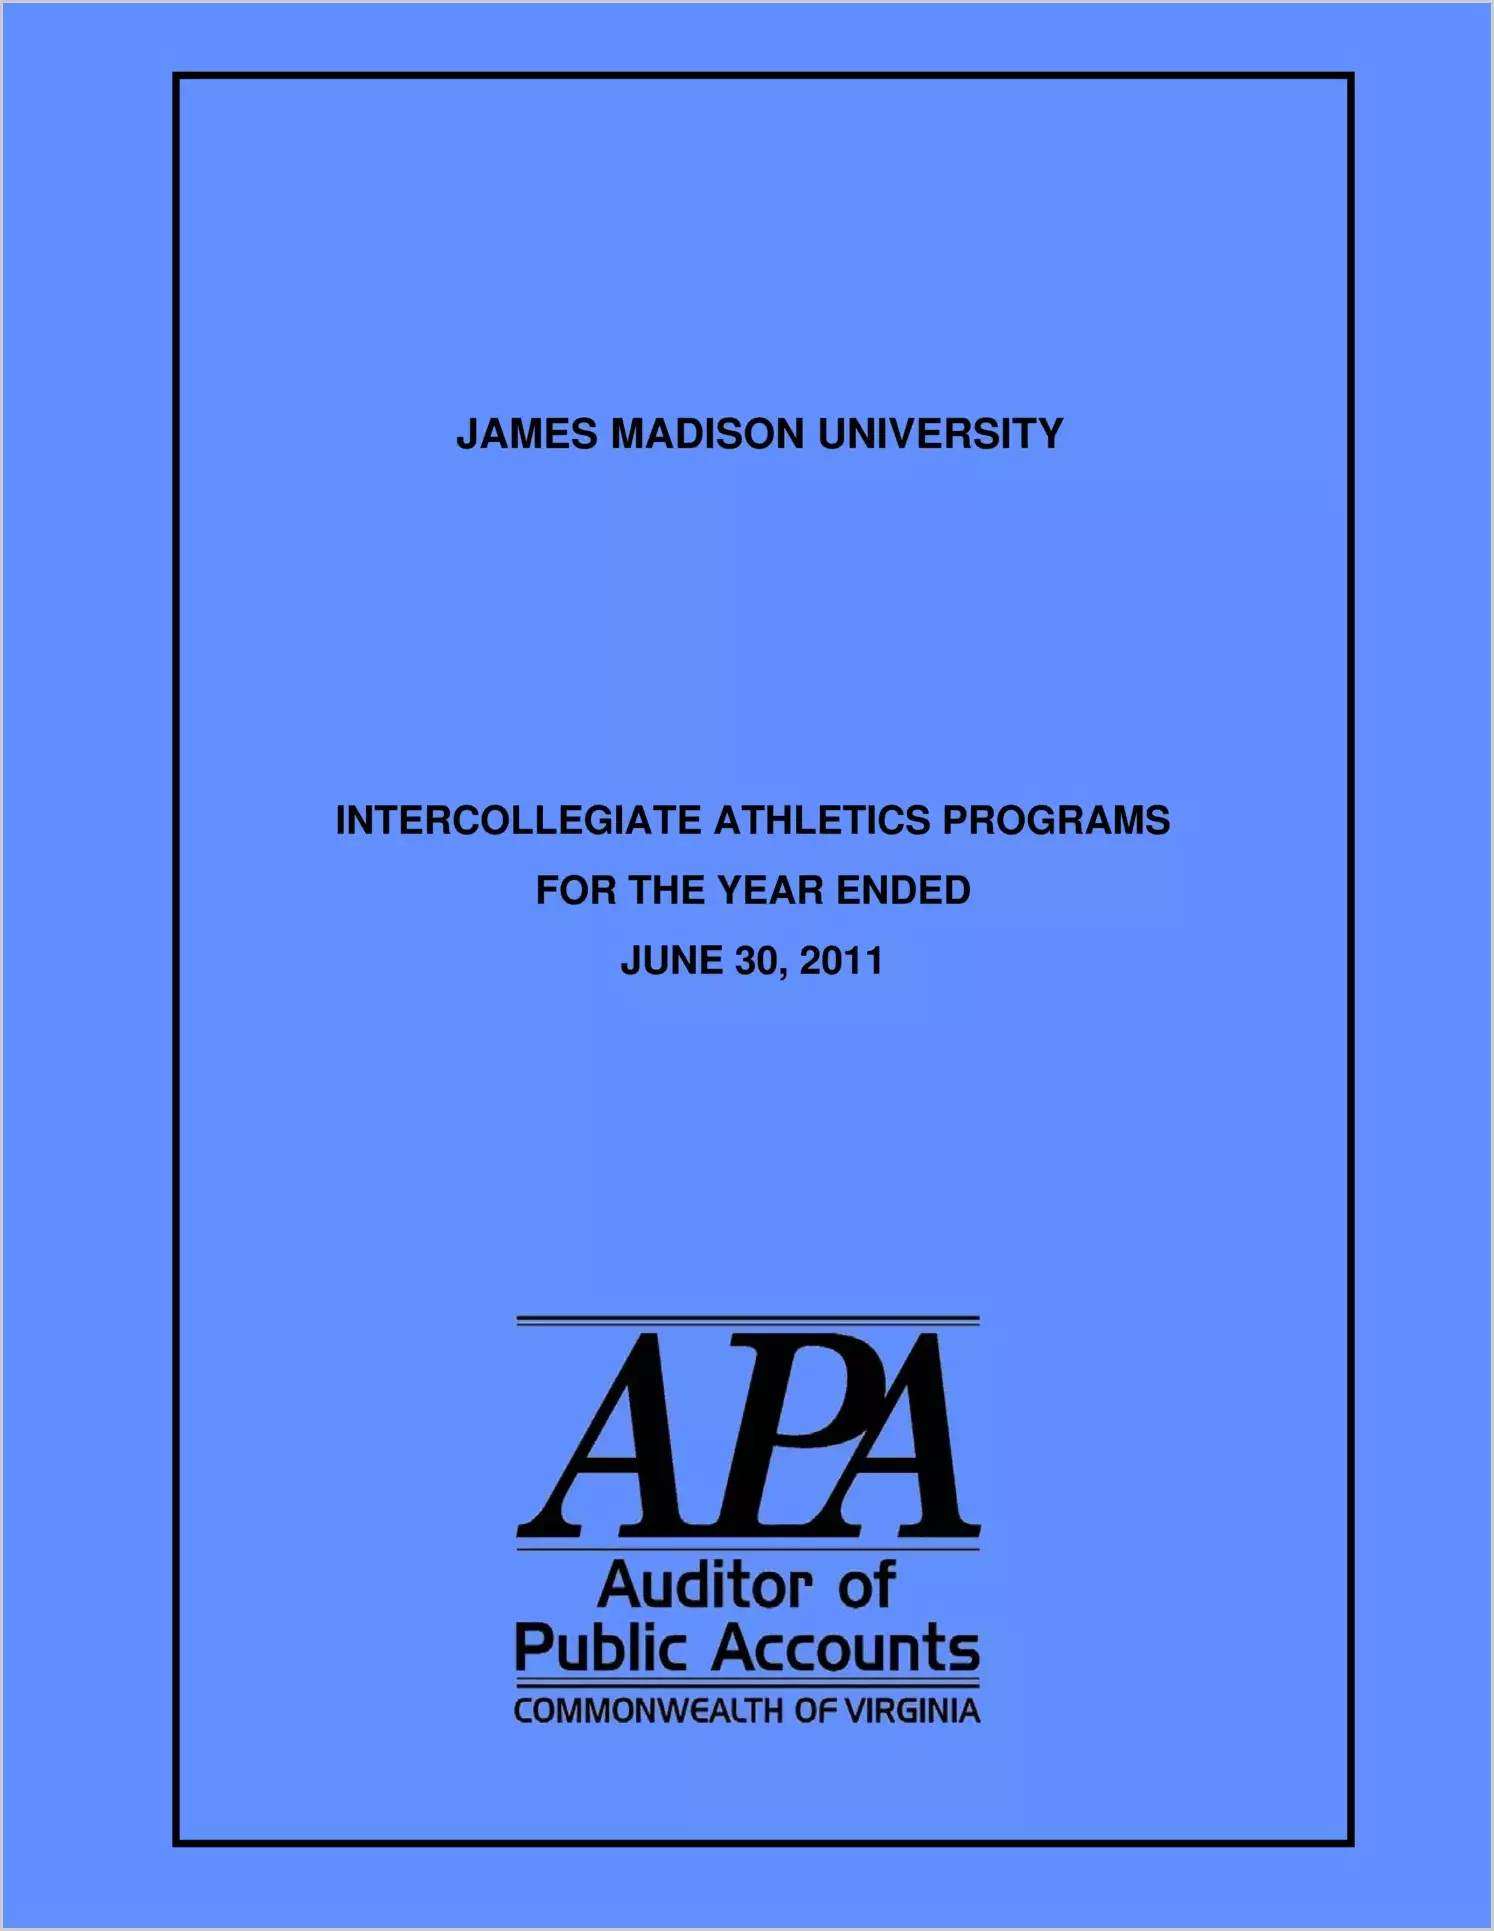 James Madison University Intercollegiate Athletics Programs for the year ended June 30, 2011